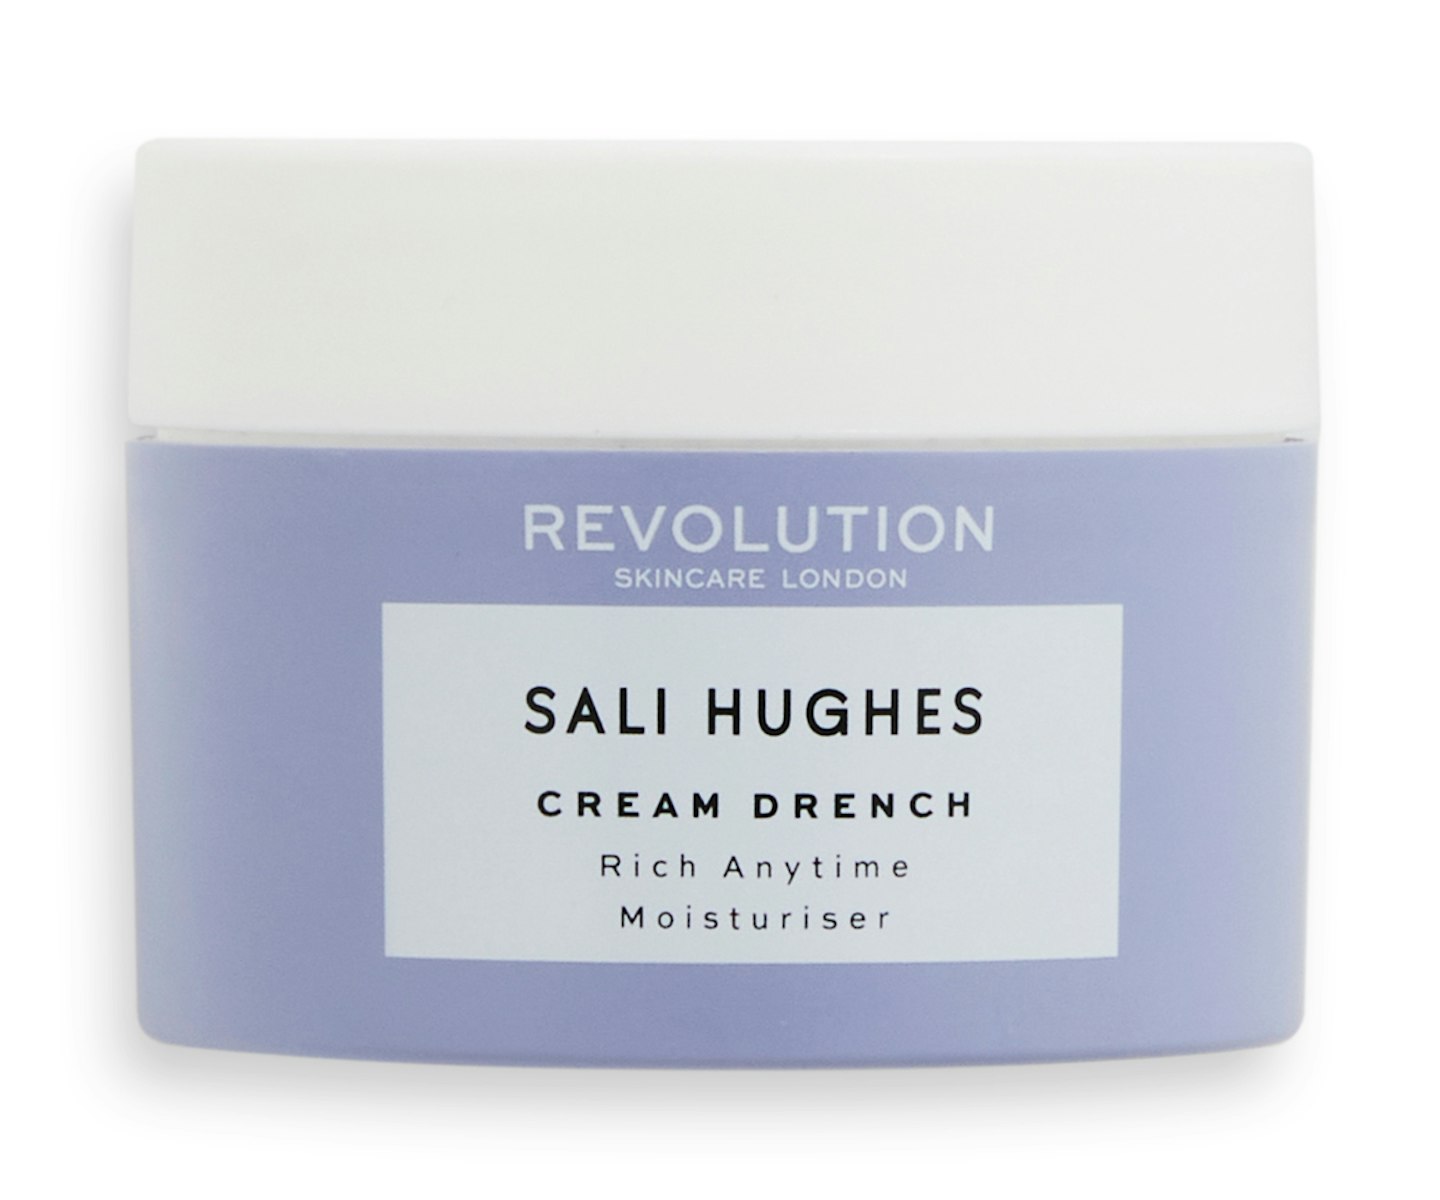 A picture of the Revolution Skincare X Sali Hughes Cream Drench Moisturiser